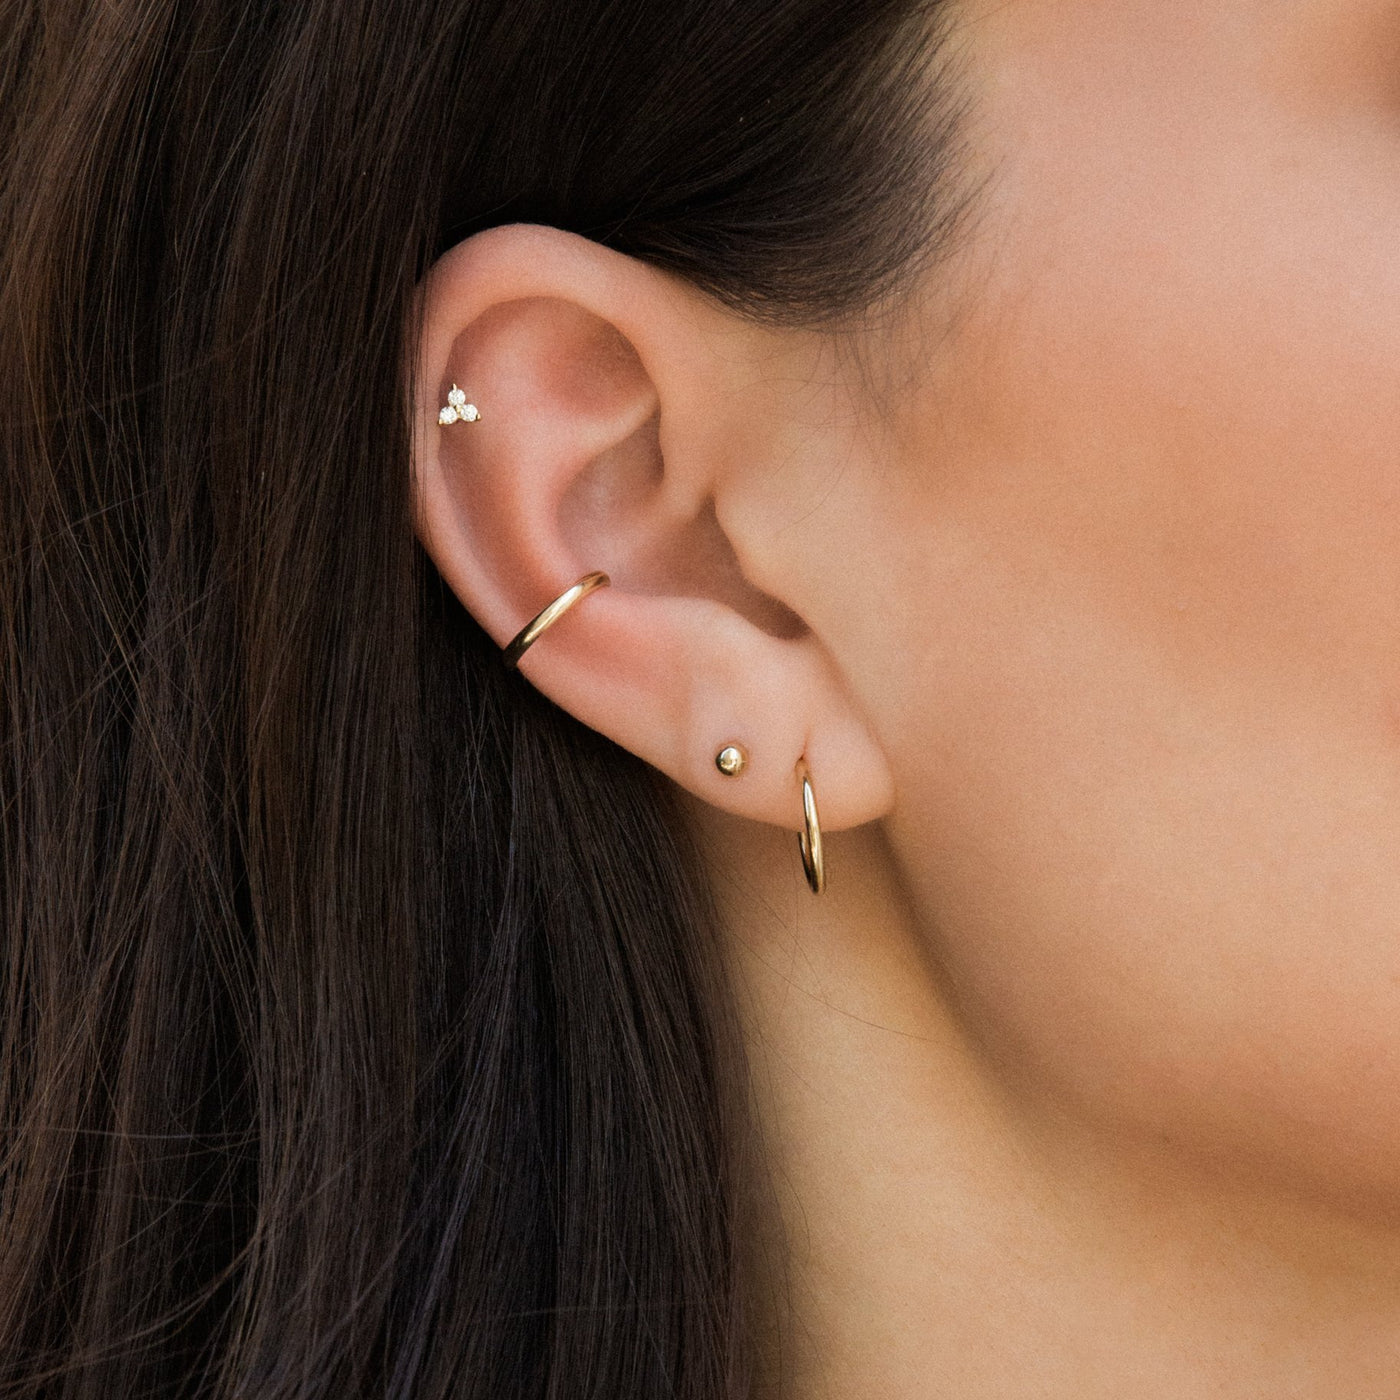 Dainty Ear Cuff by Simple & Dainty Jewelry